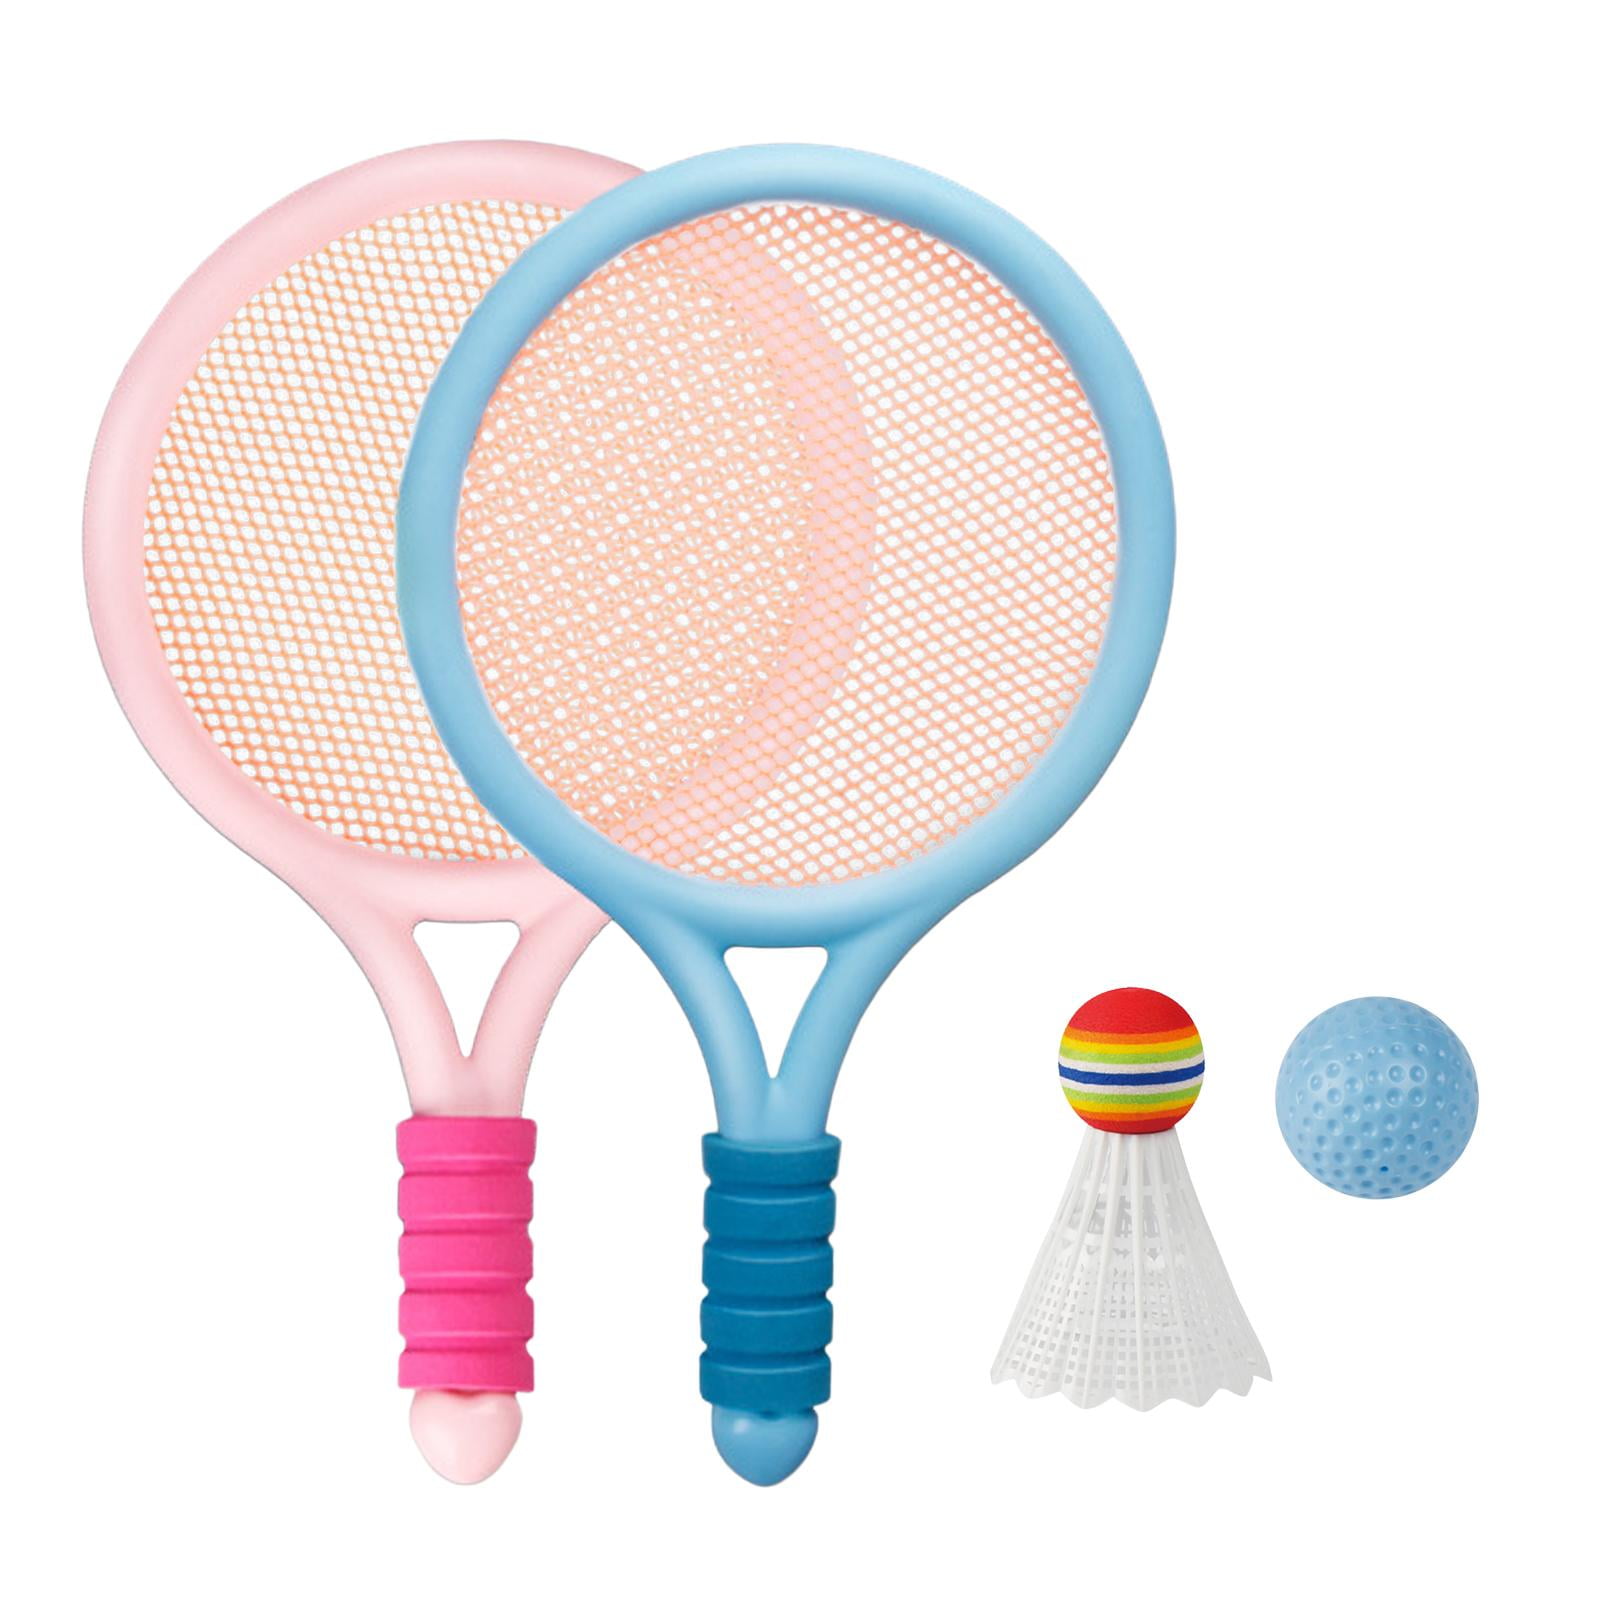 ball badminton racket online shopping